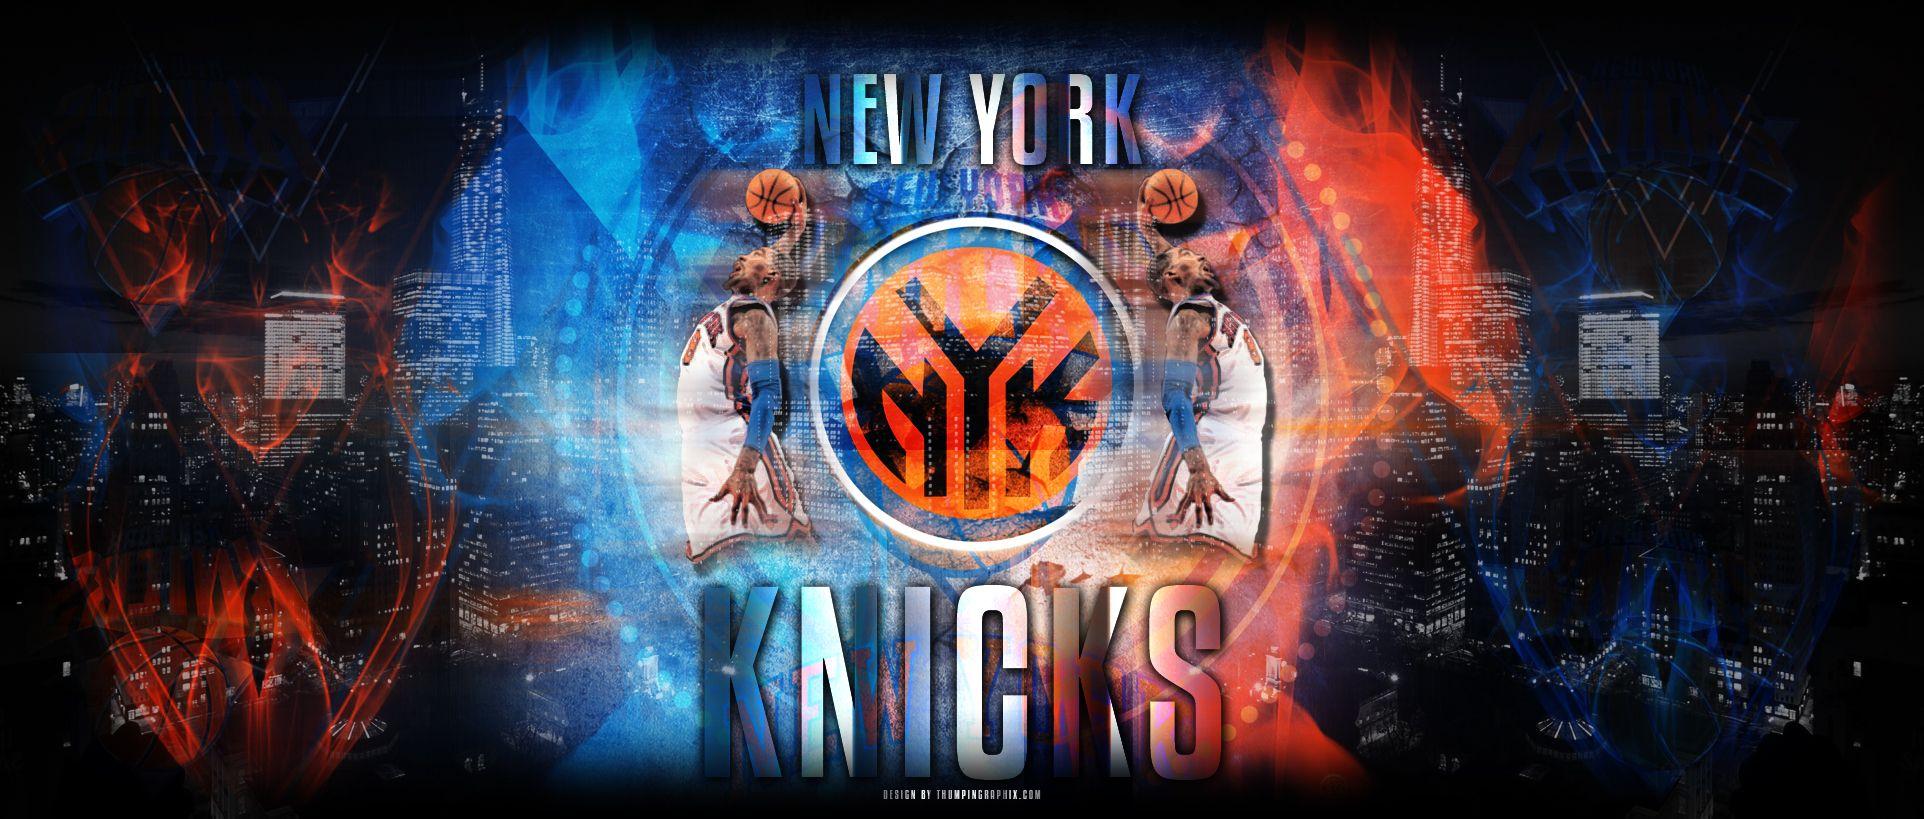 New York Knicks Wallpaper New York Knicks (Old School